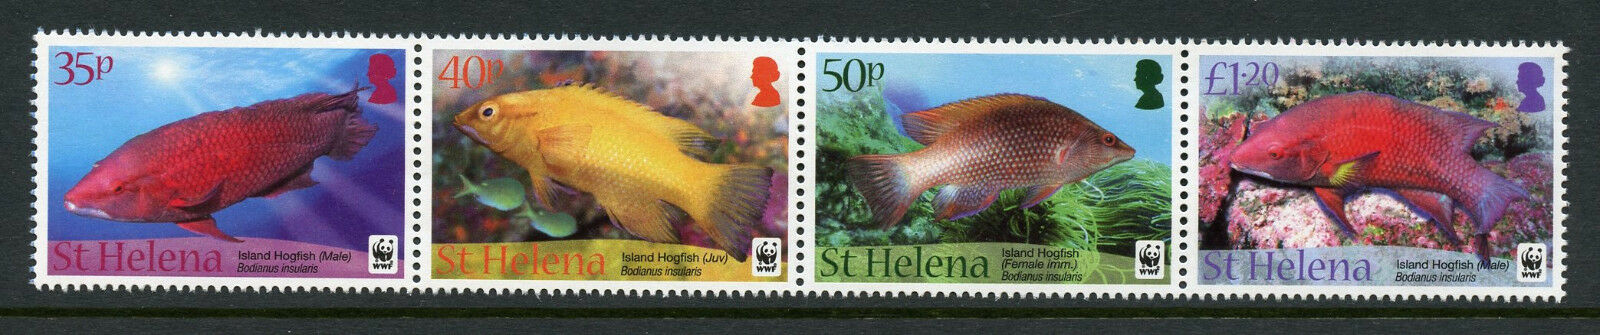 St Helena 2011 MNH WWF Island Hogfish 4v Strip Fish Fishes Marine Stamps